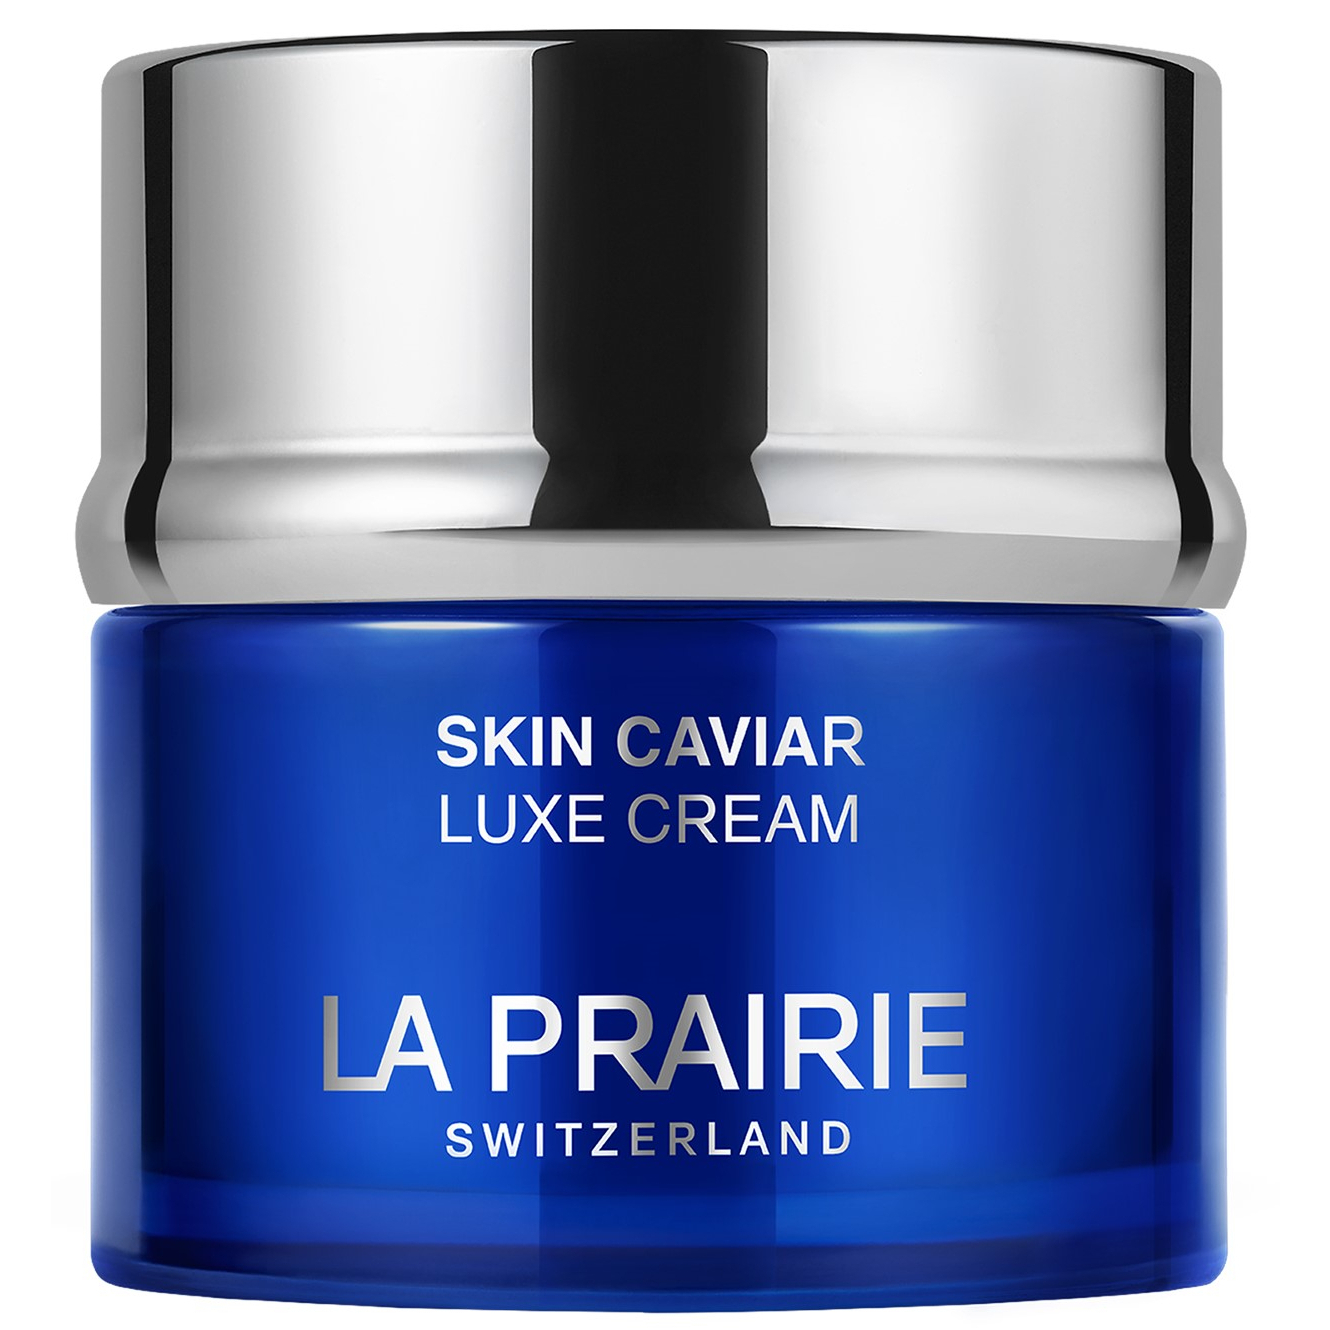 La Prairie La Prairie Skin Caviar Luxe Cream Gezichtscrème 100 ml